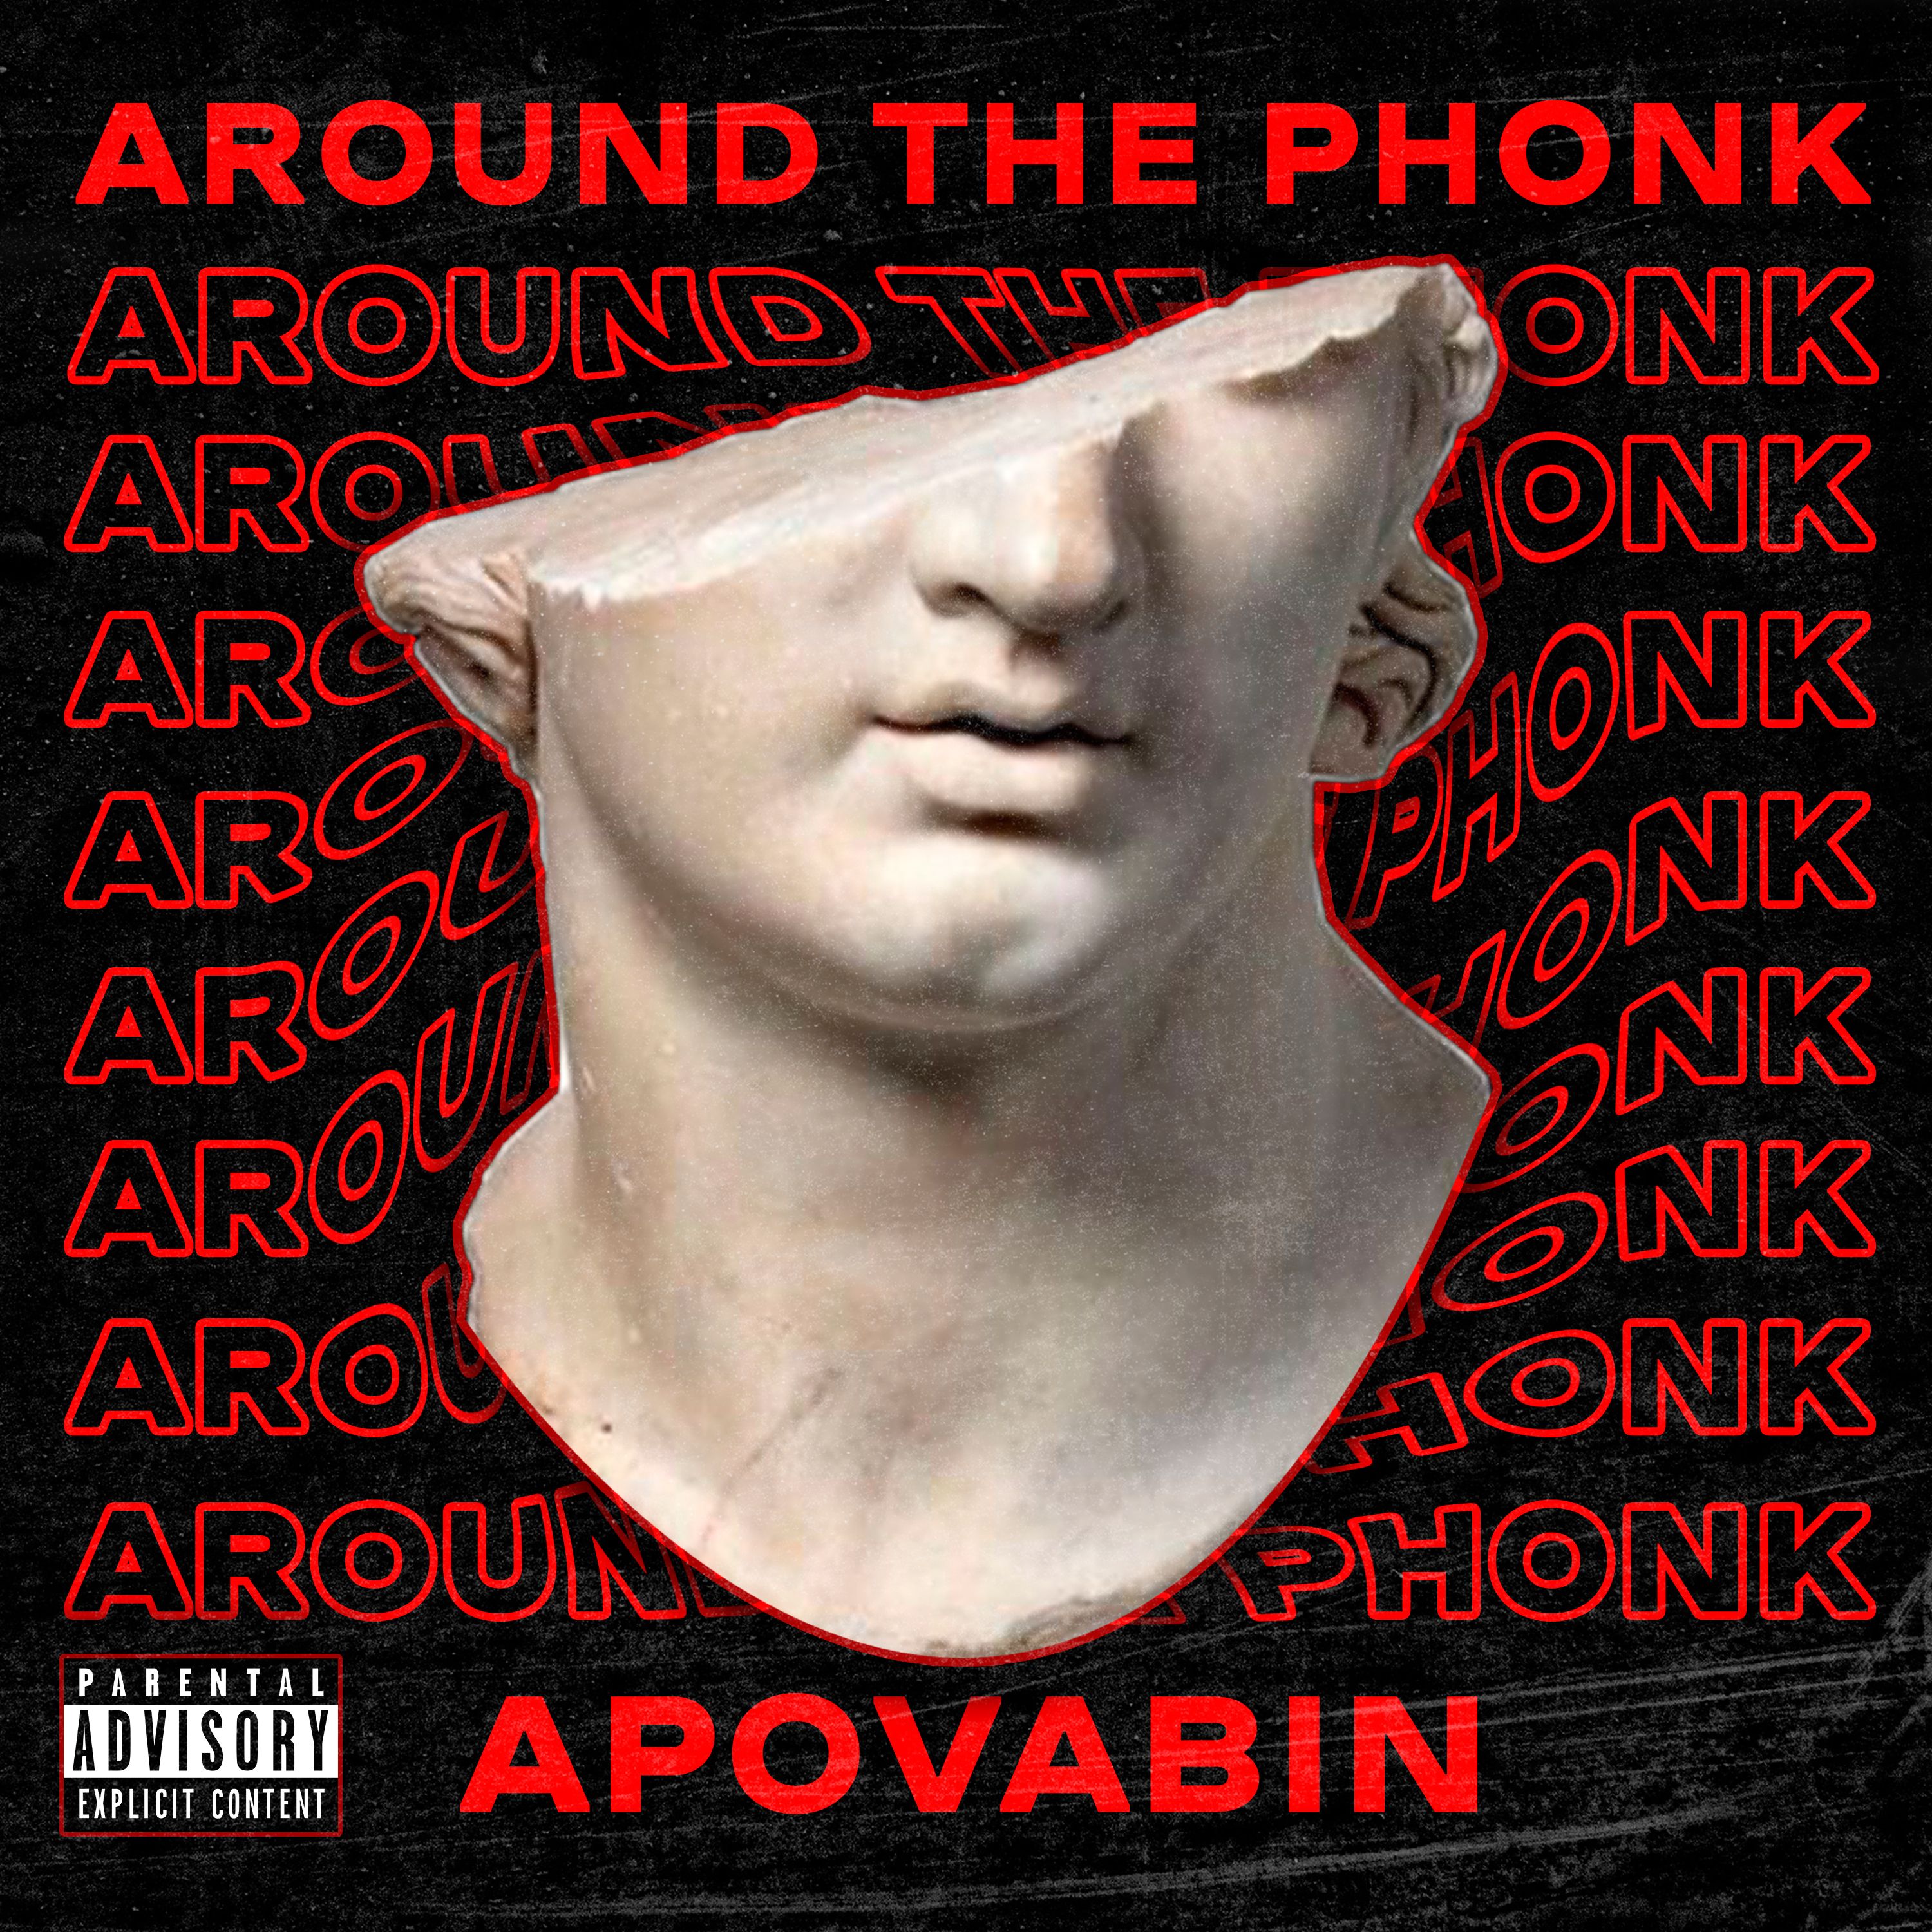 डाउनलोड करा Apovabin - AROUND THE PHONK